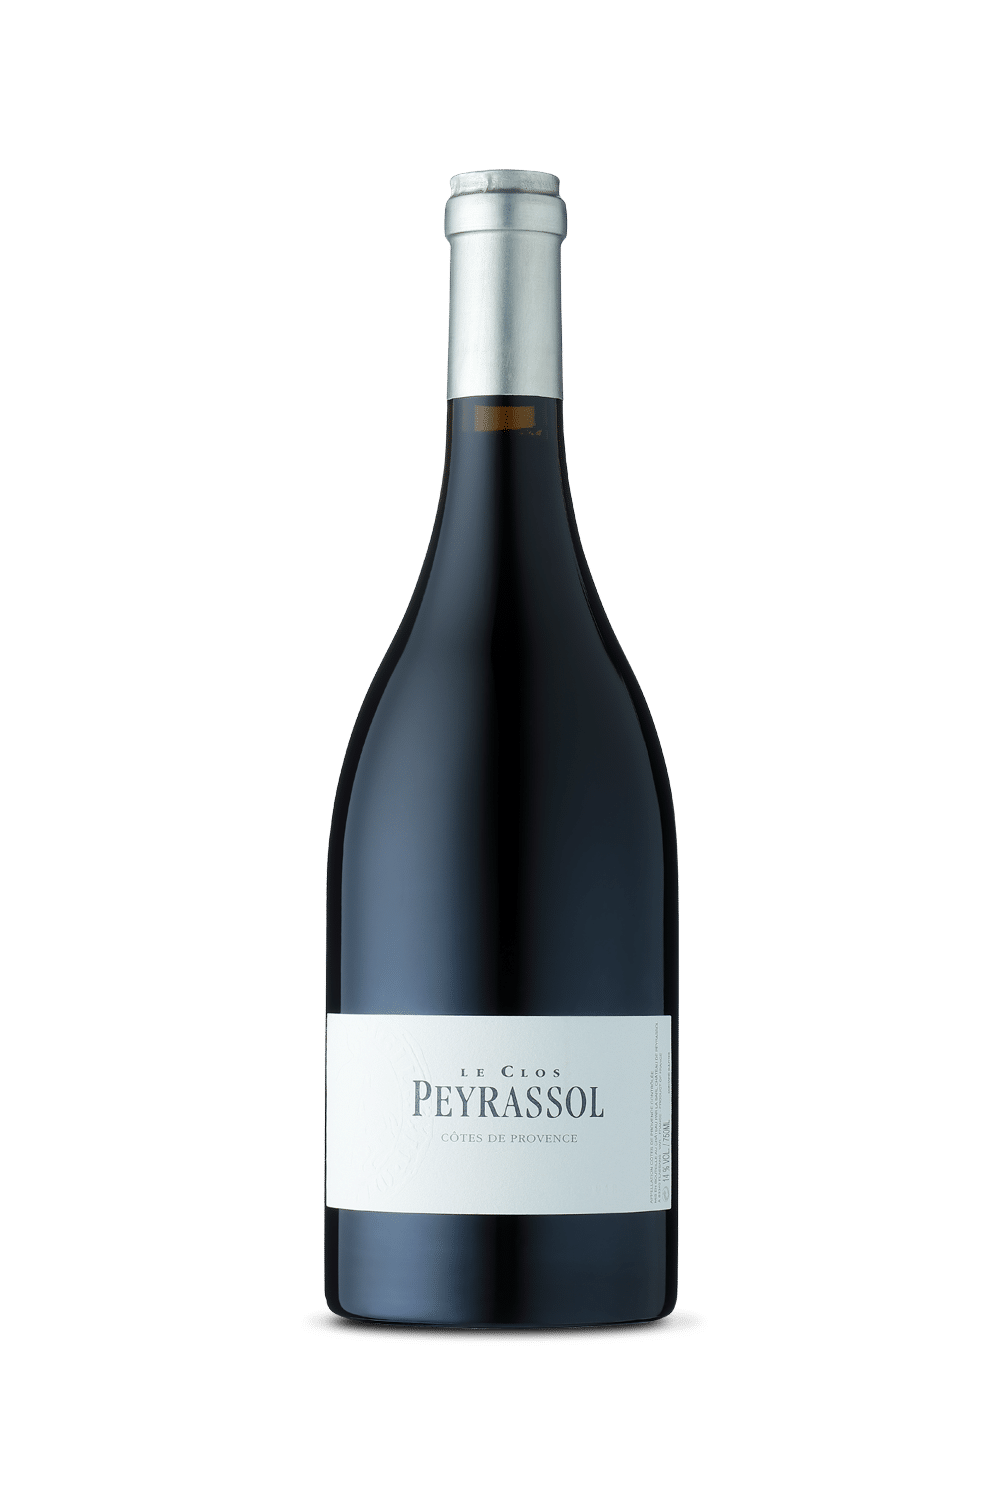 Clos Peyrassol Rouge Peyrassol, vin blanc du domaine de la Commanderie de Peyrassol (vin de provence)